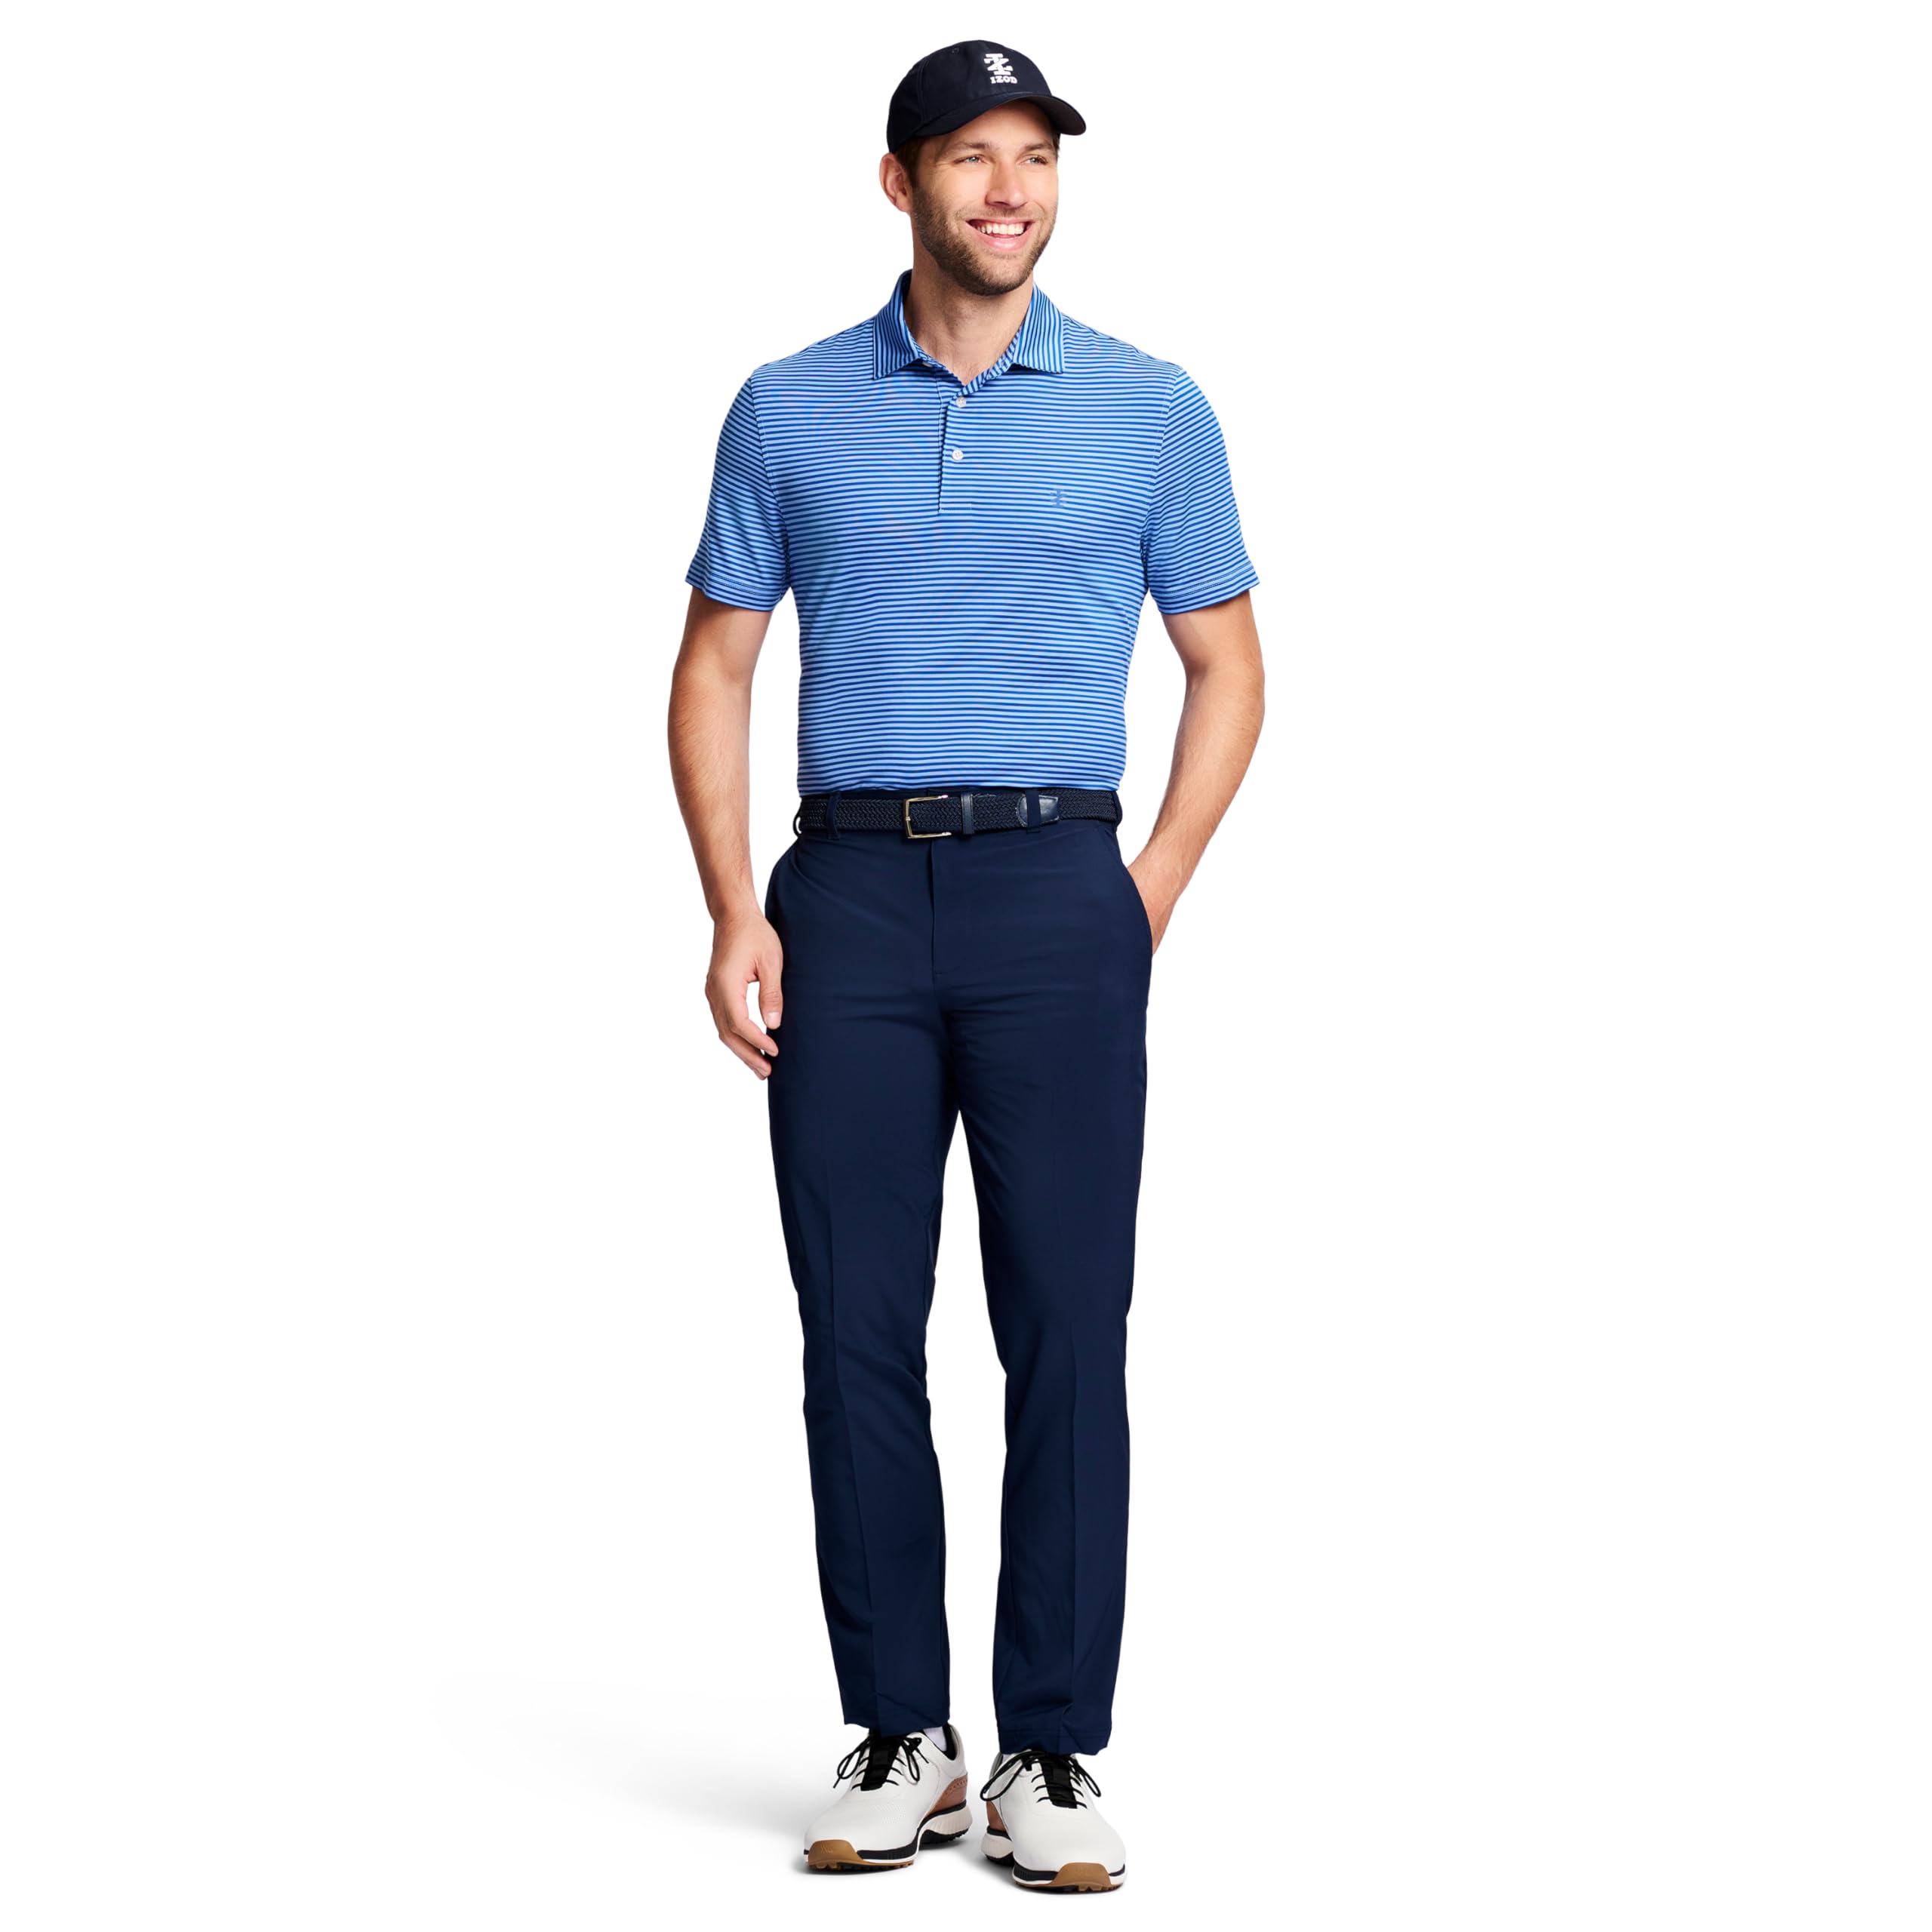 IZOD Men's Golf Swingflex Straight-fit Flat-Front Pants